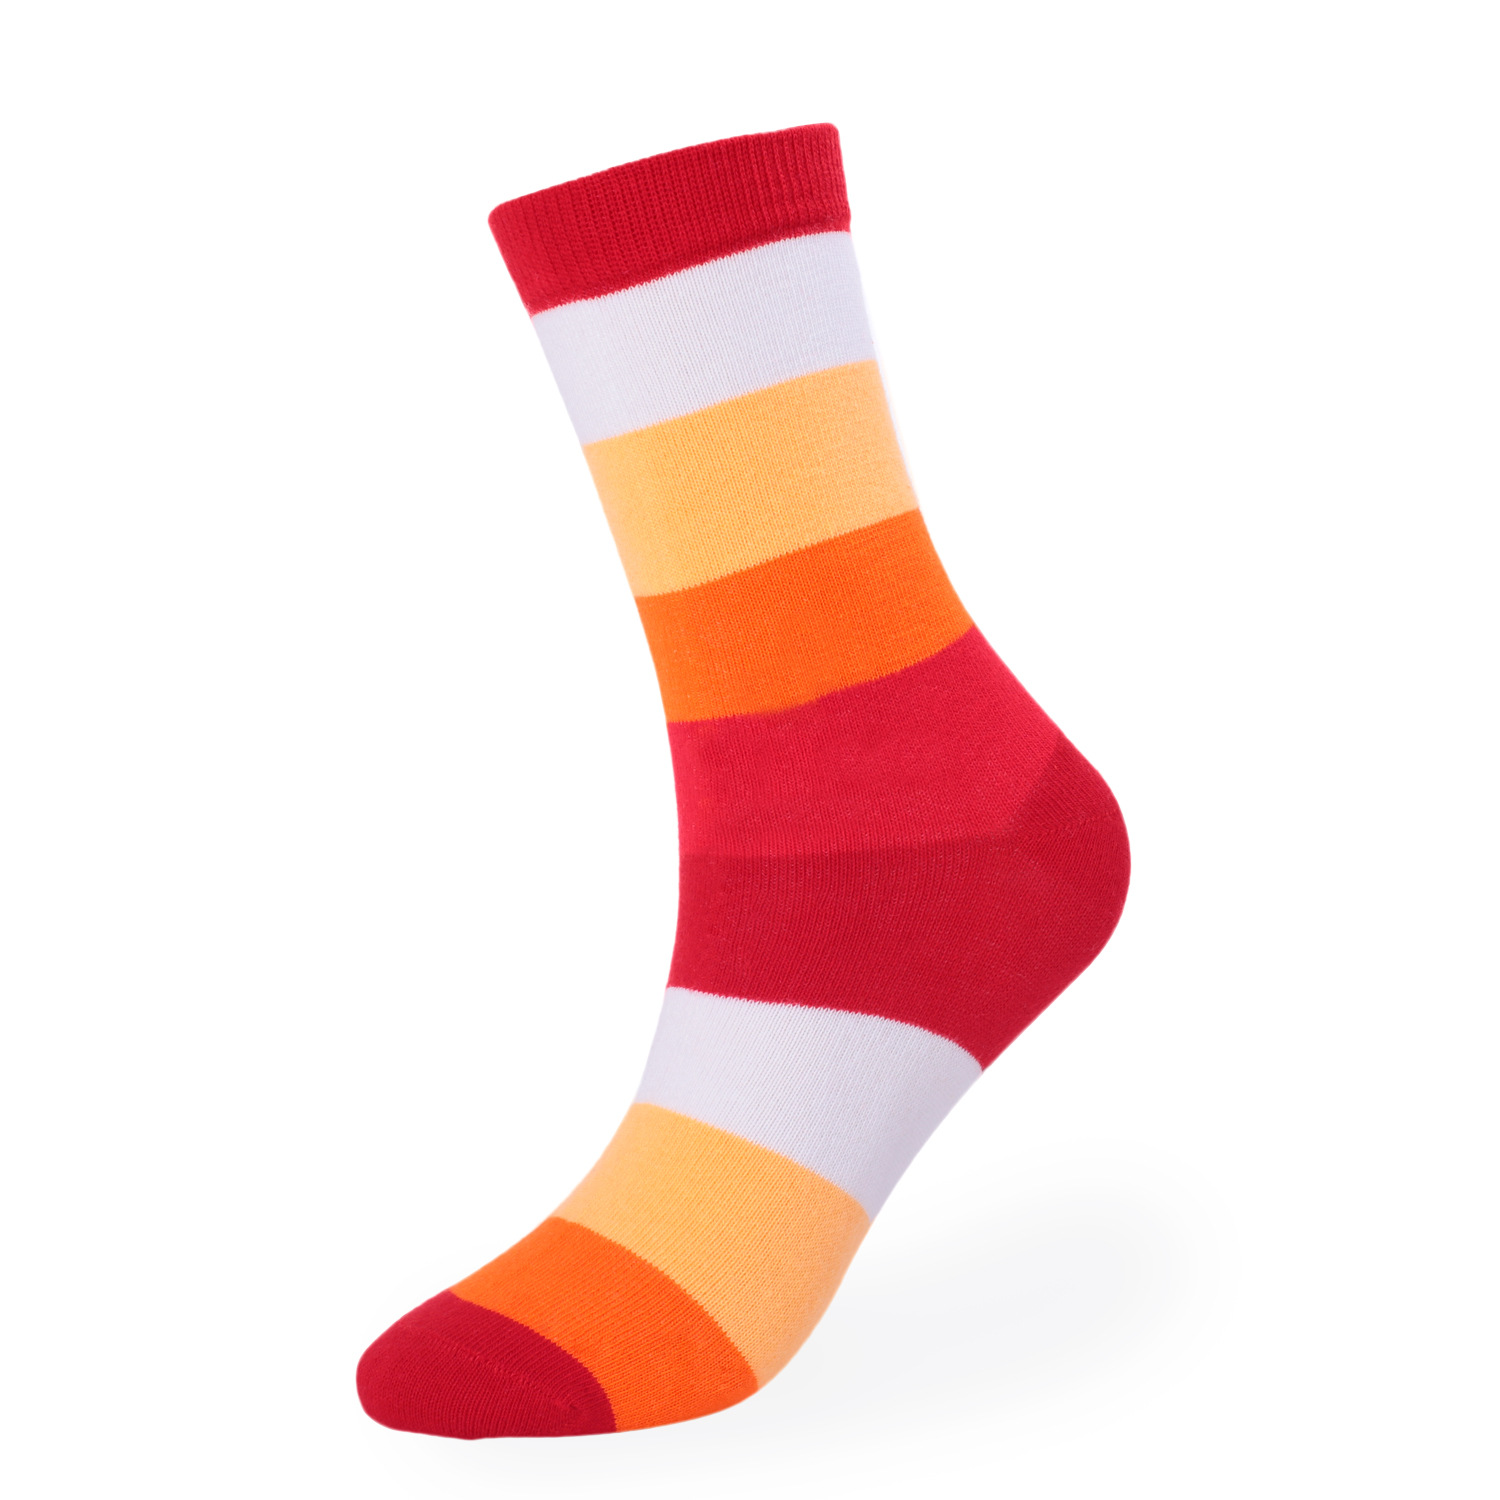 5 Pairs Colorful Rainbow Socks Fashion Striped Cotton Thick Socks